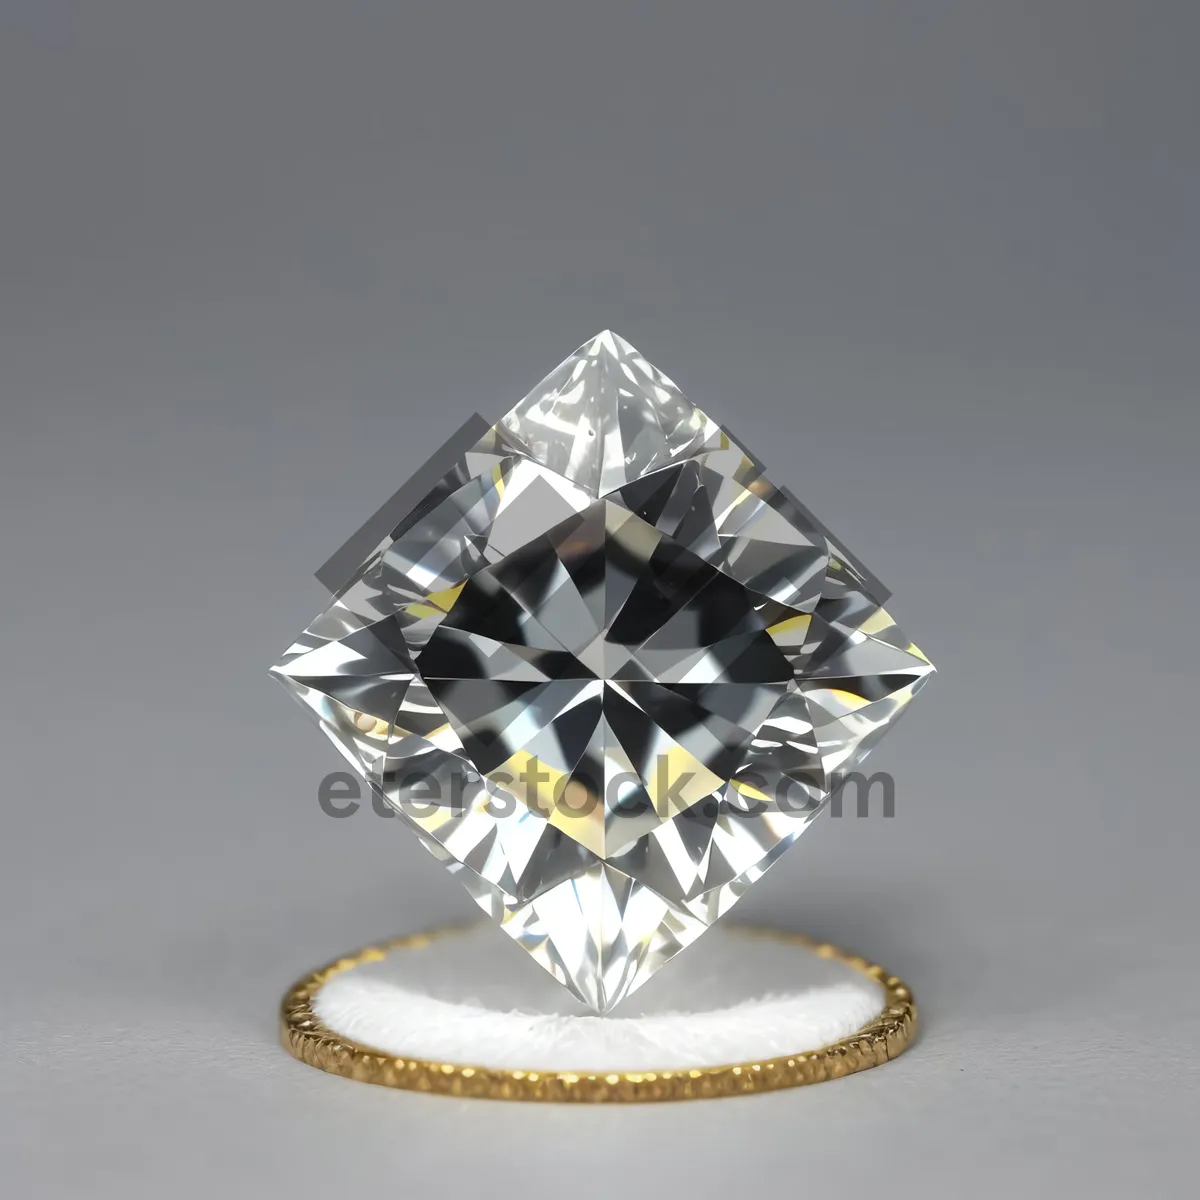 Picture of Brilliant Diamond Jewel - Shimmering Celebration Gift